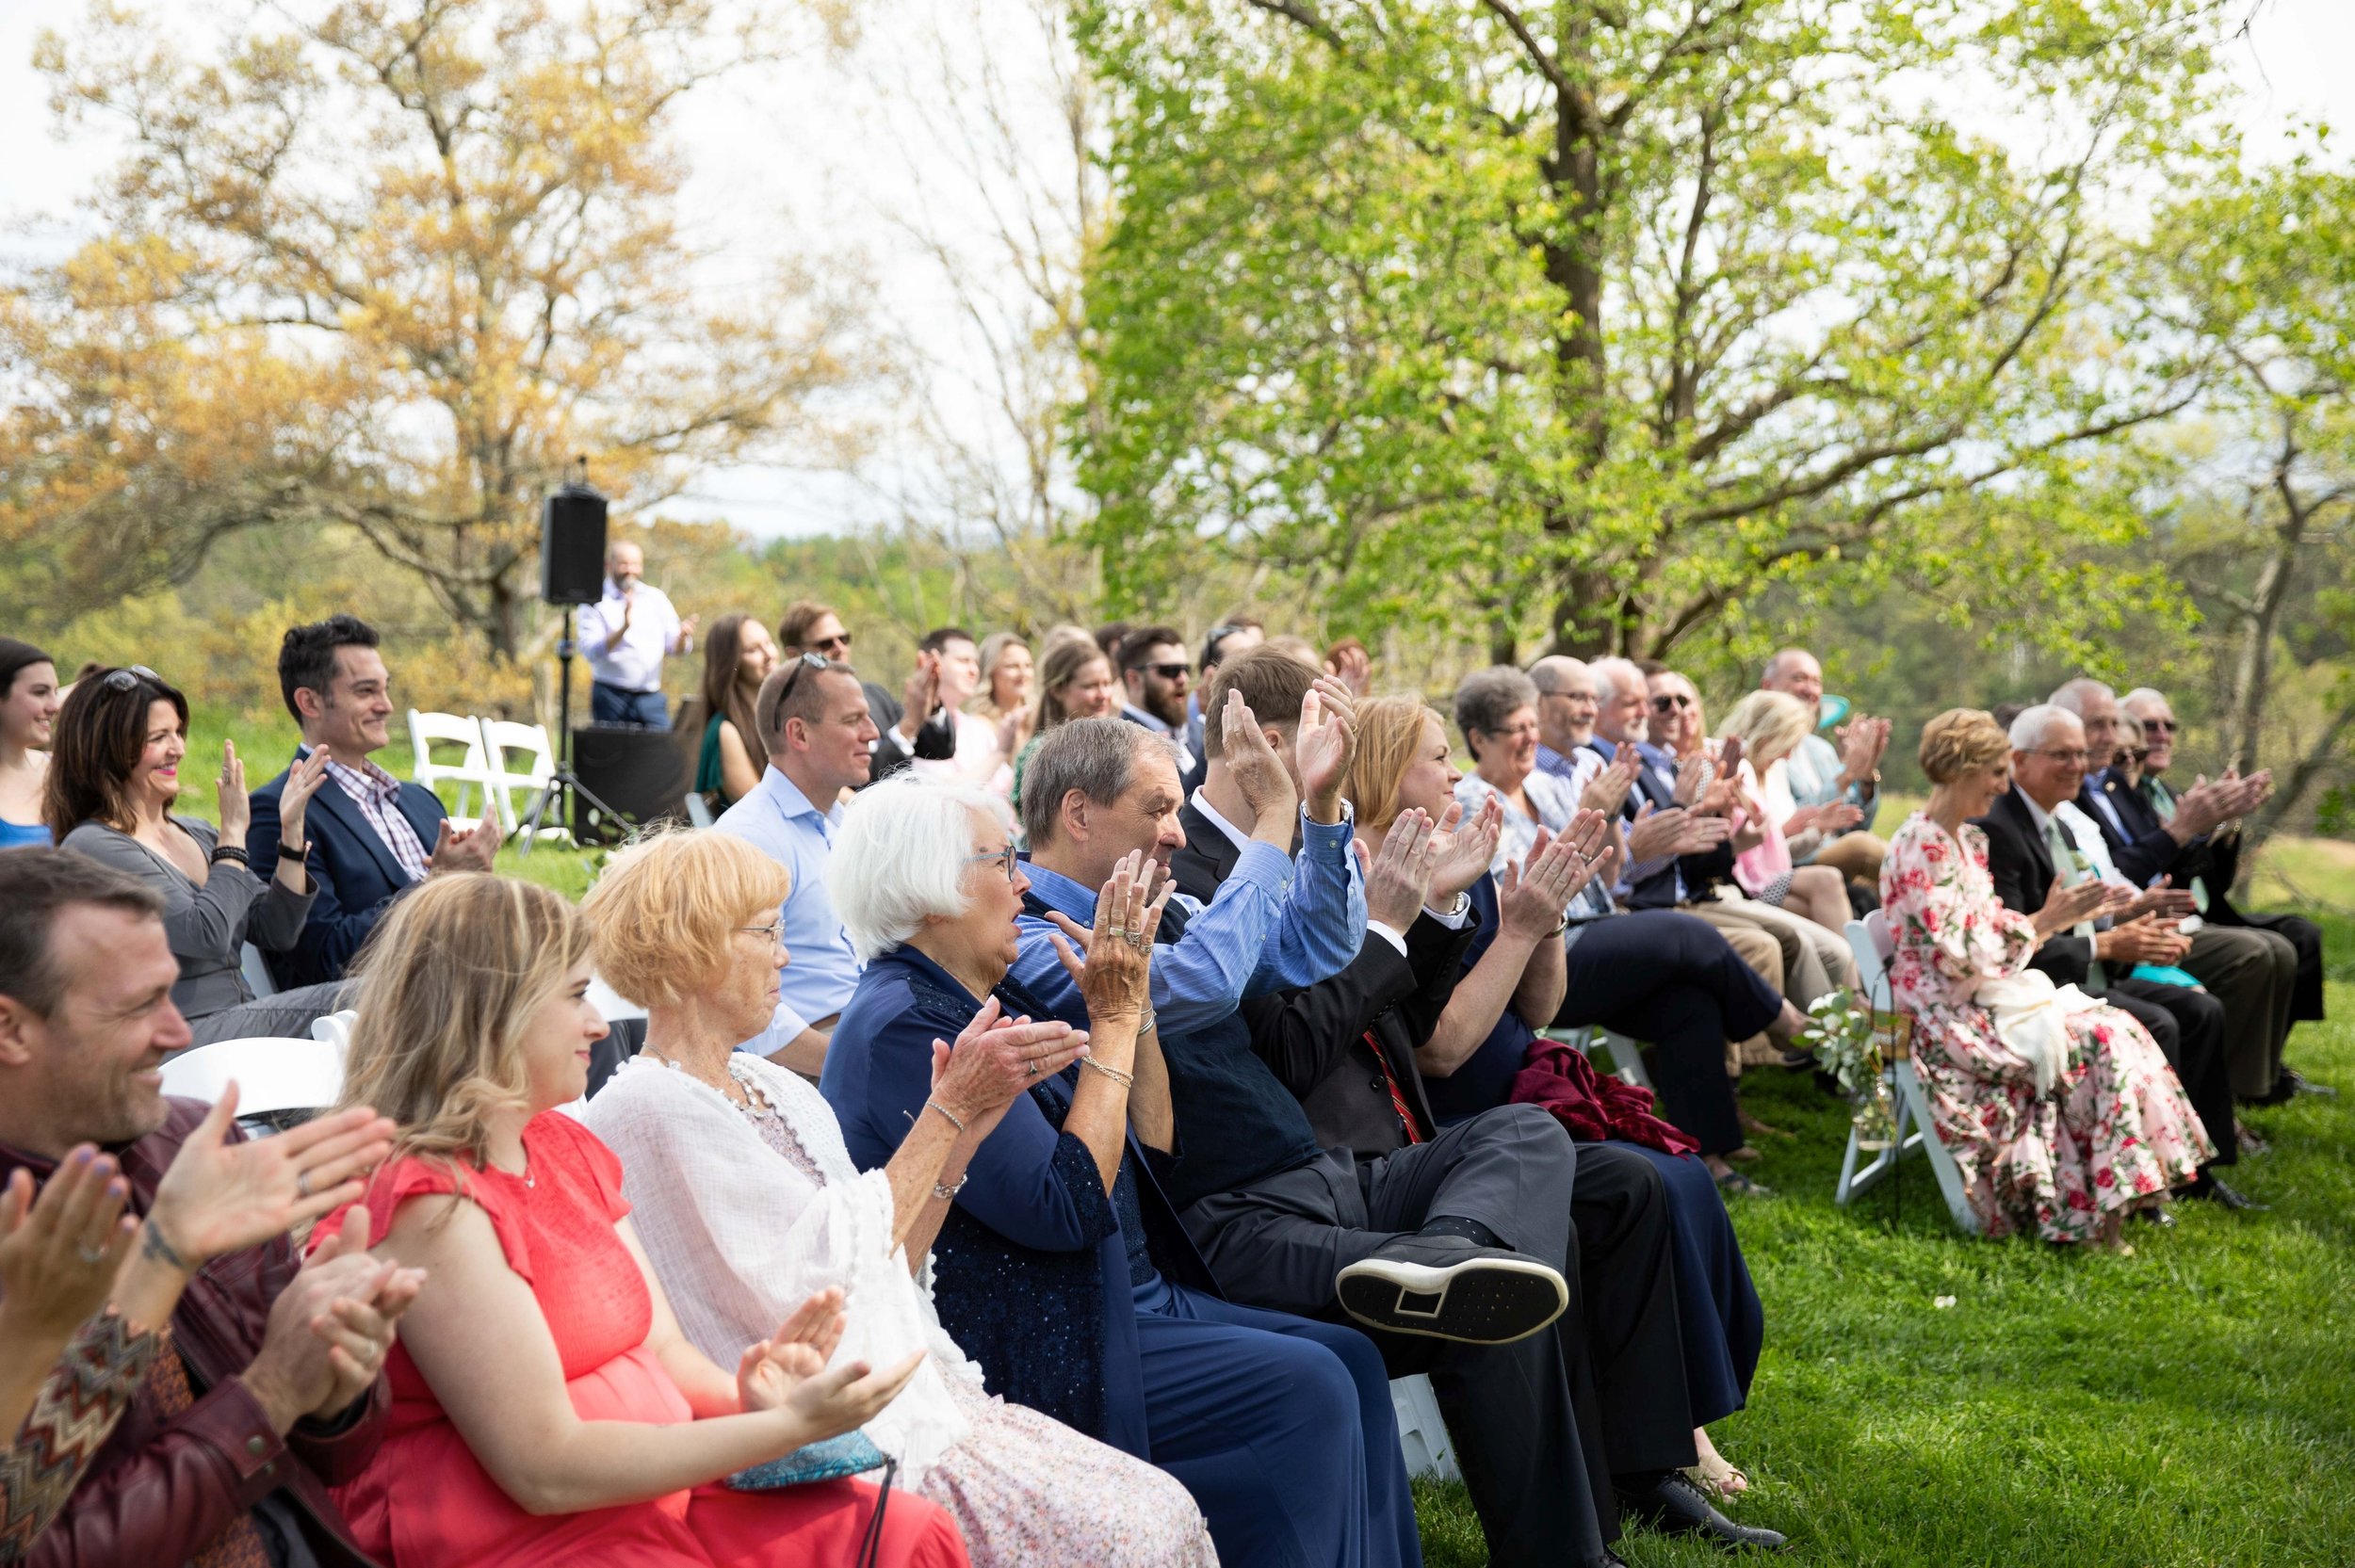 Outdoor April Wedding in Asheville North Carolina at Emerald Ridge Farm & Event Center blog 1 50.jpg